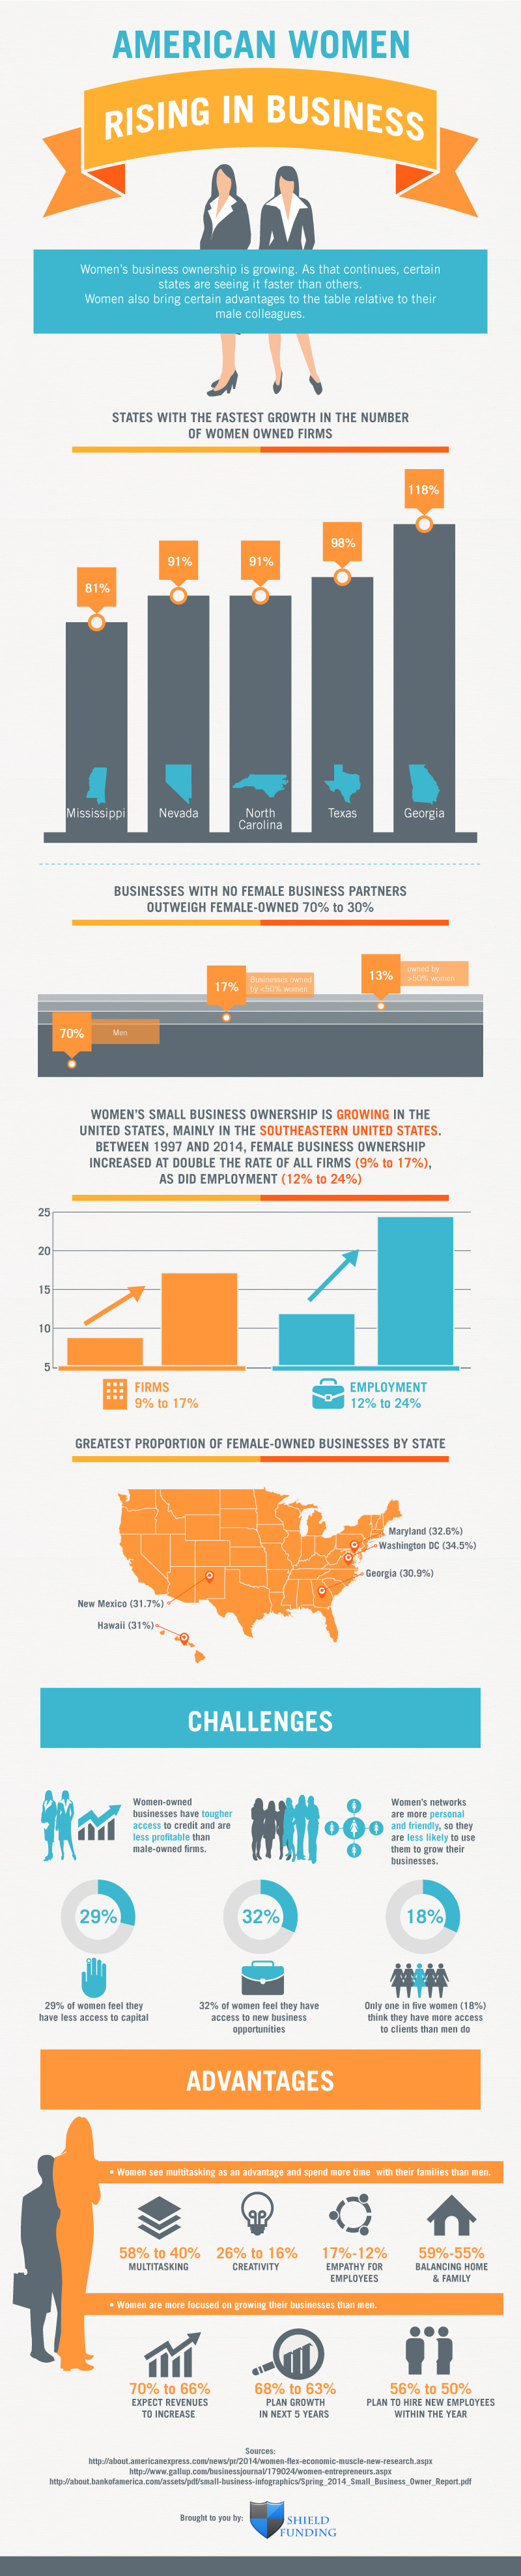 American Women Rising in Business